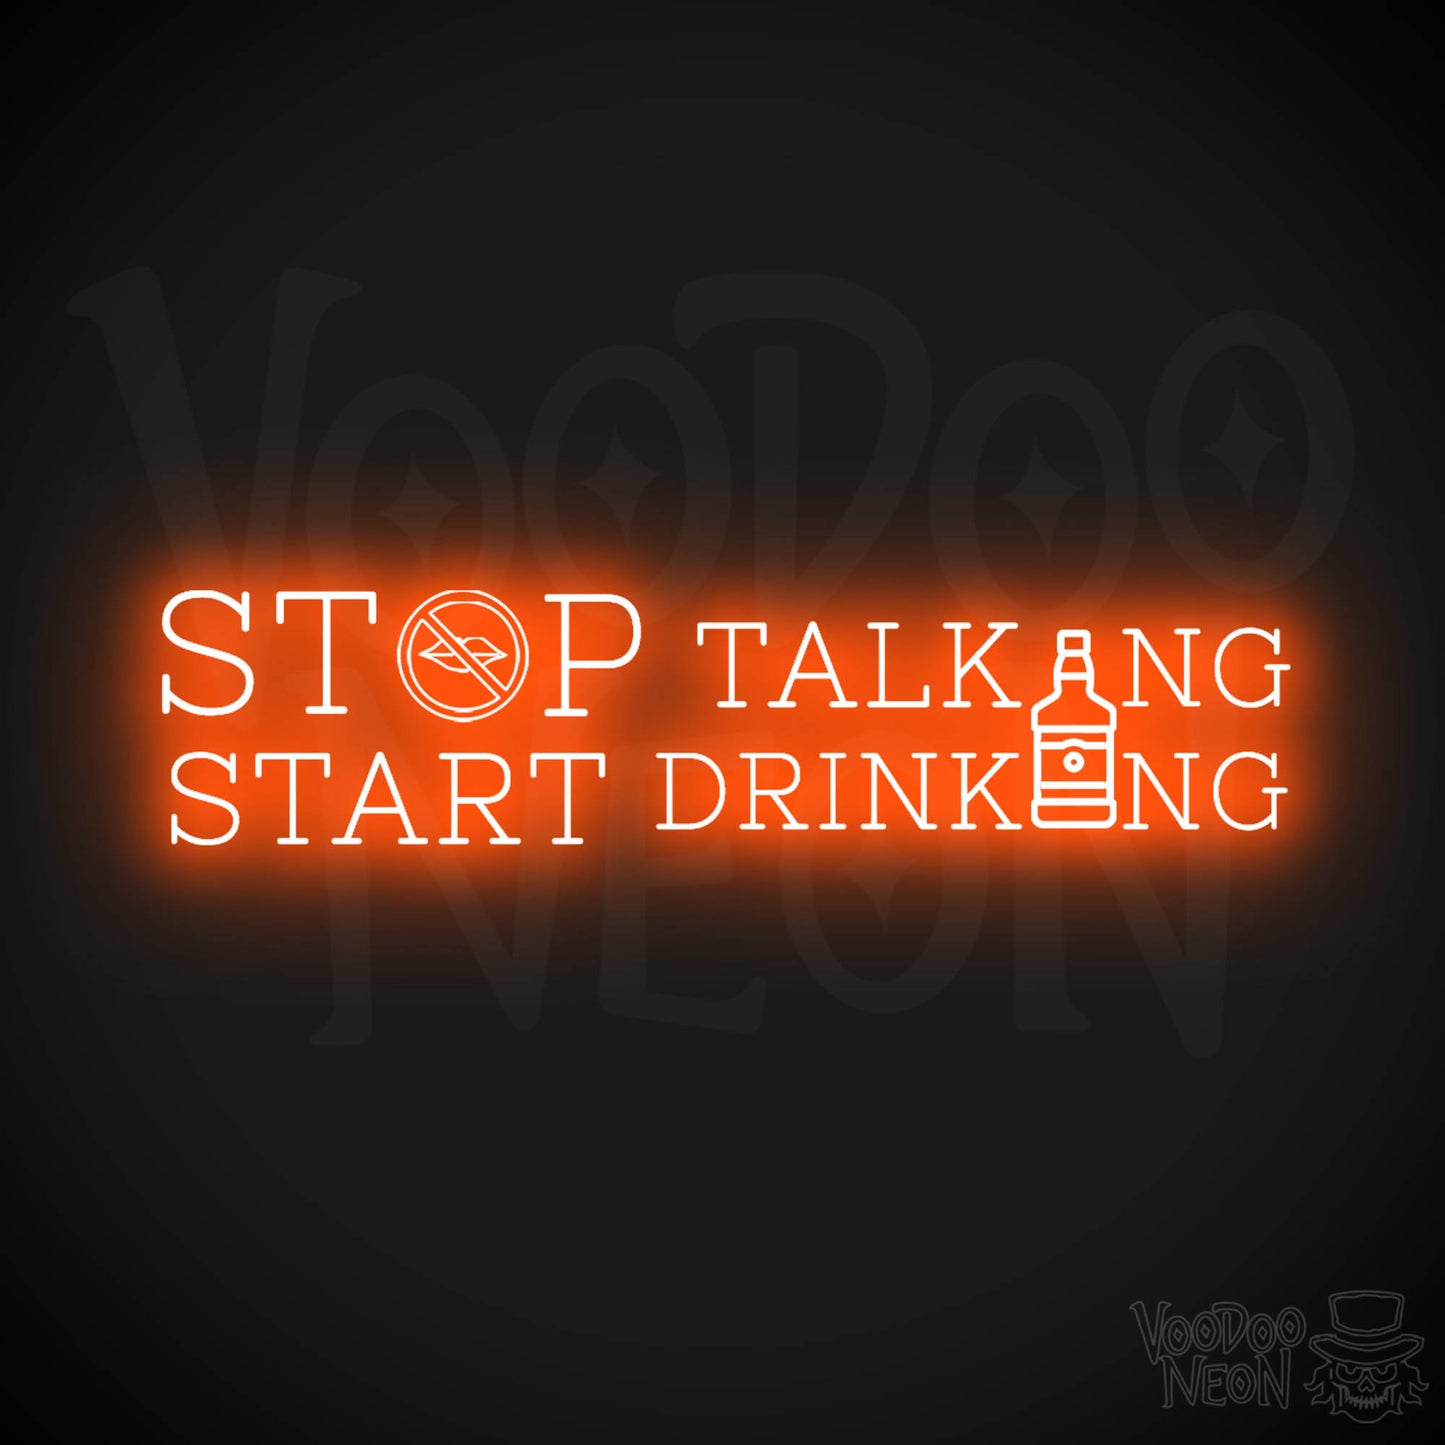 Stop Talking Start Drinking Neon Sign - Stop Talking Start Drinking Sign - Color Orange